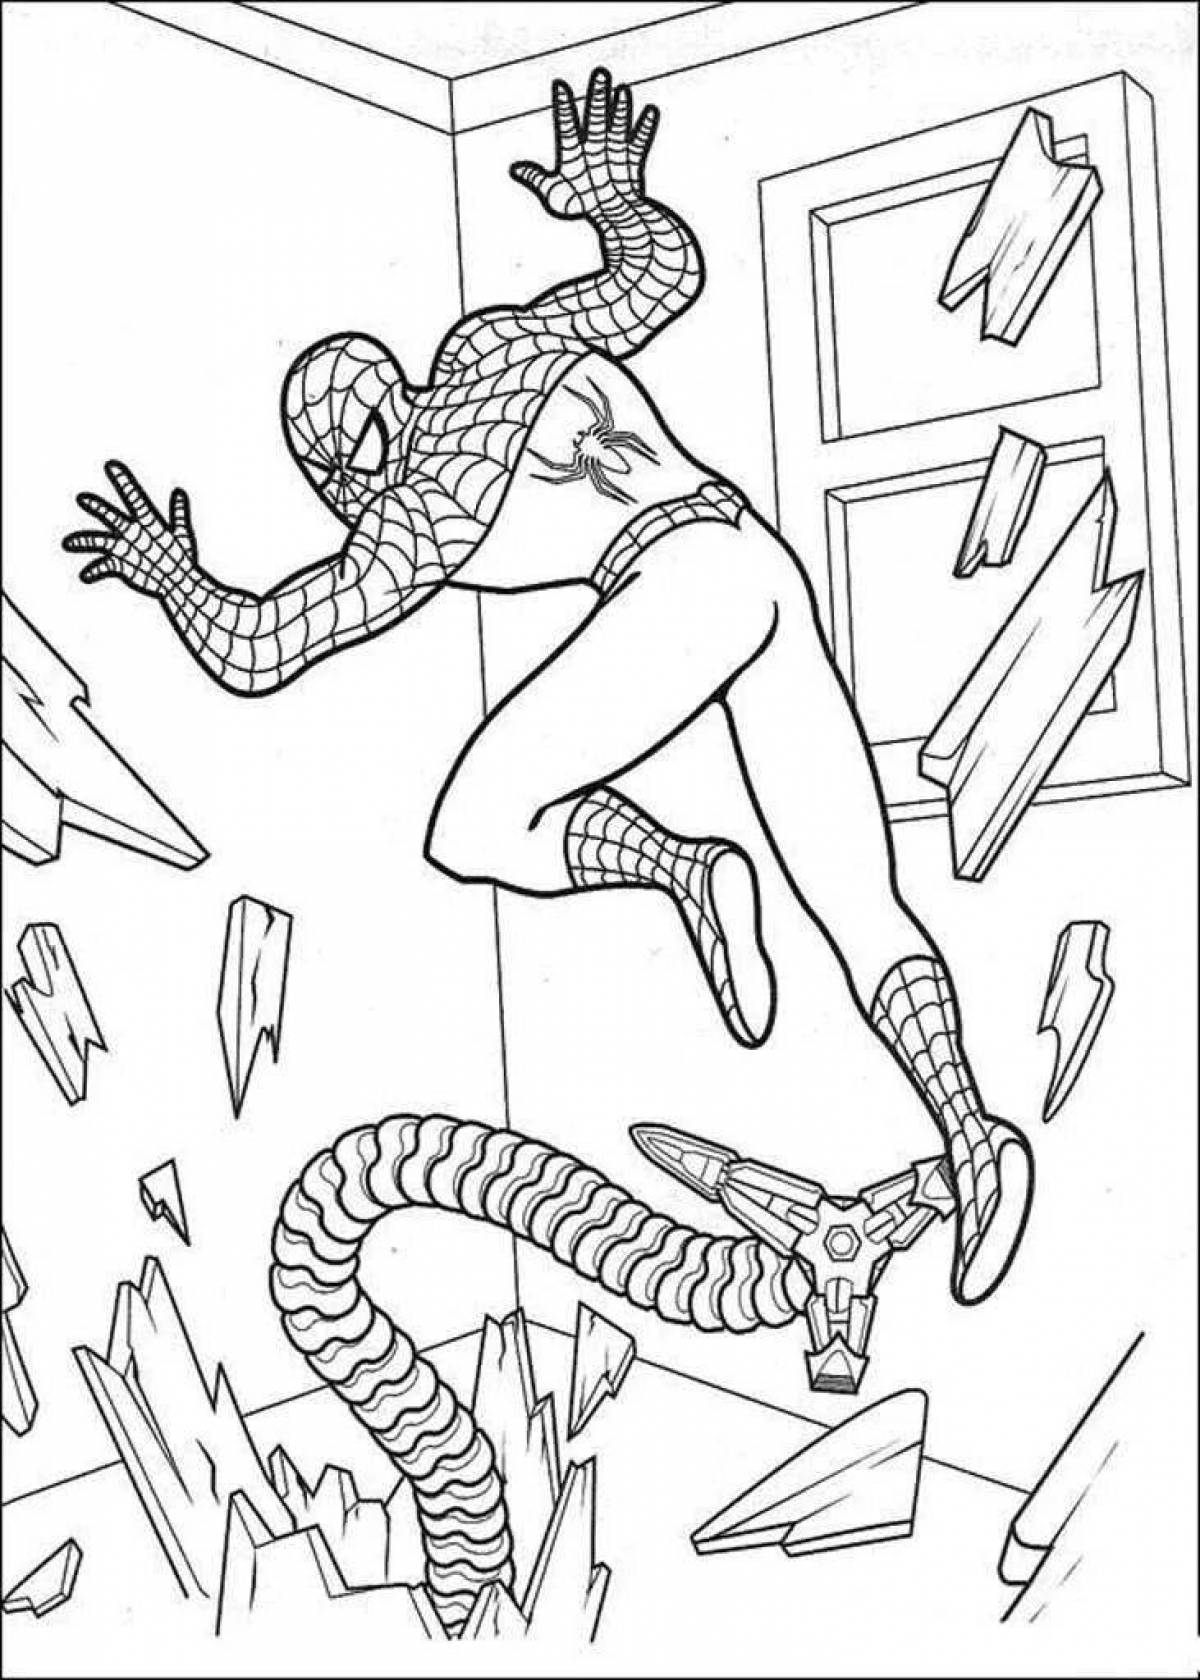 Elegant drawing of Spiderman